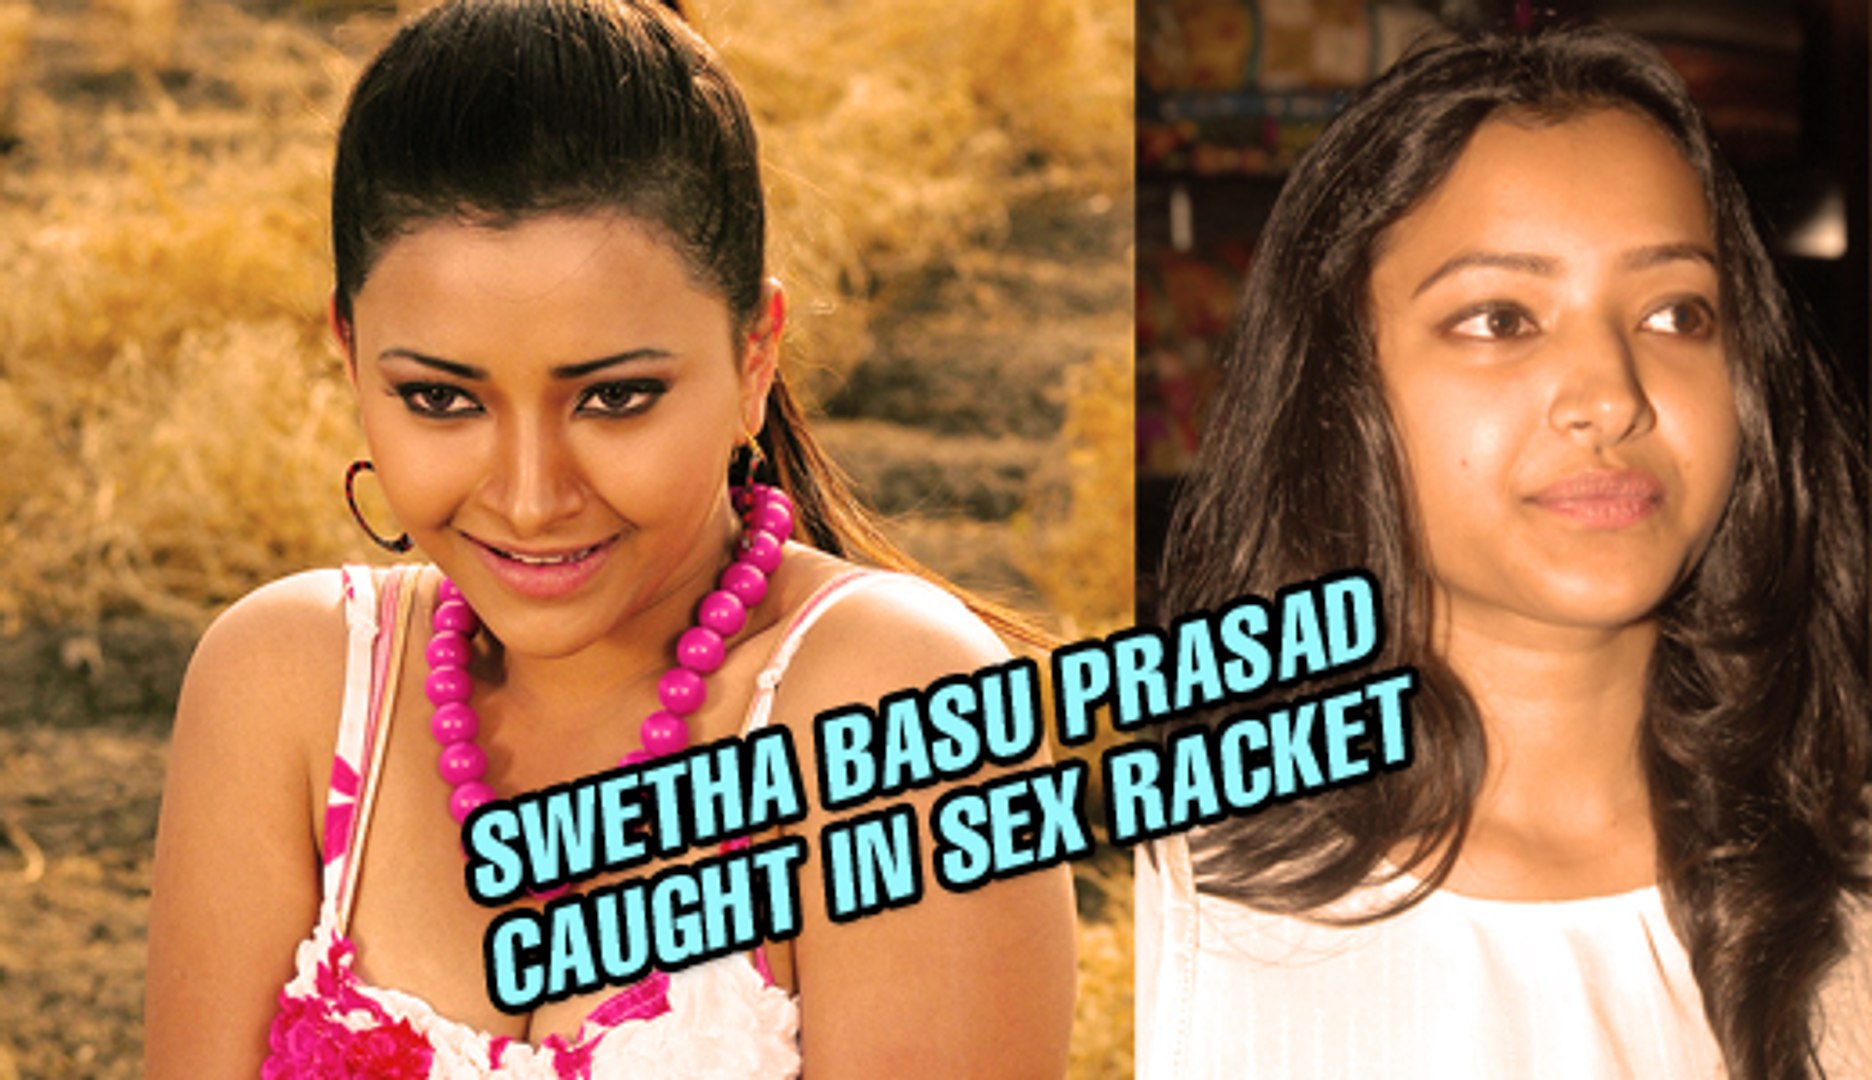 Swetha Basu Prasad Caught In Sex Racket - Bollywood News - video ...